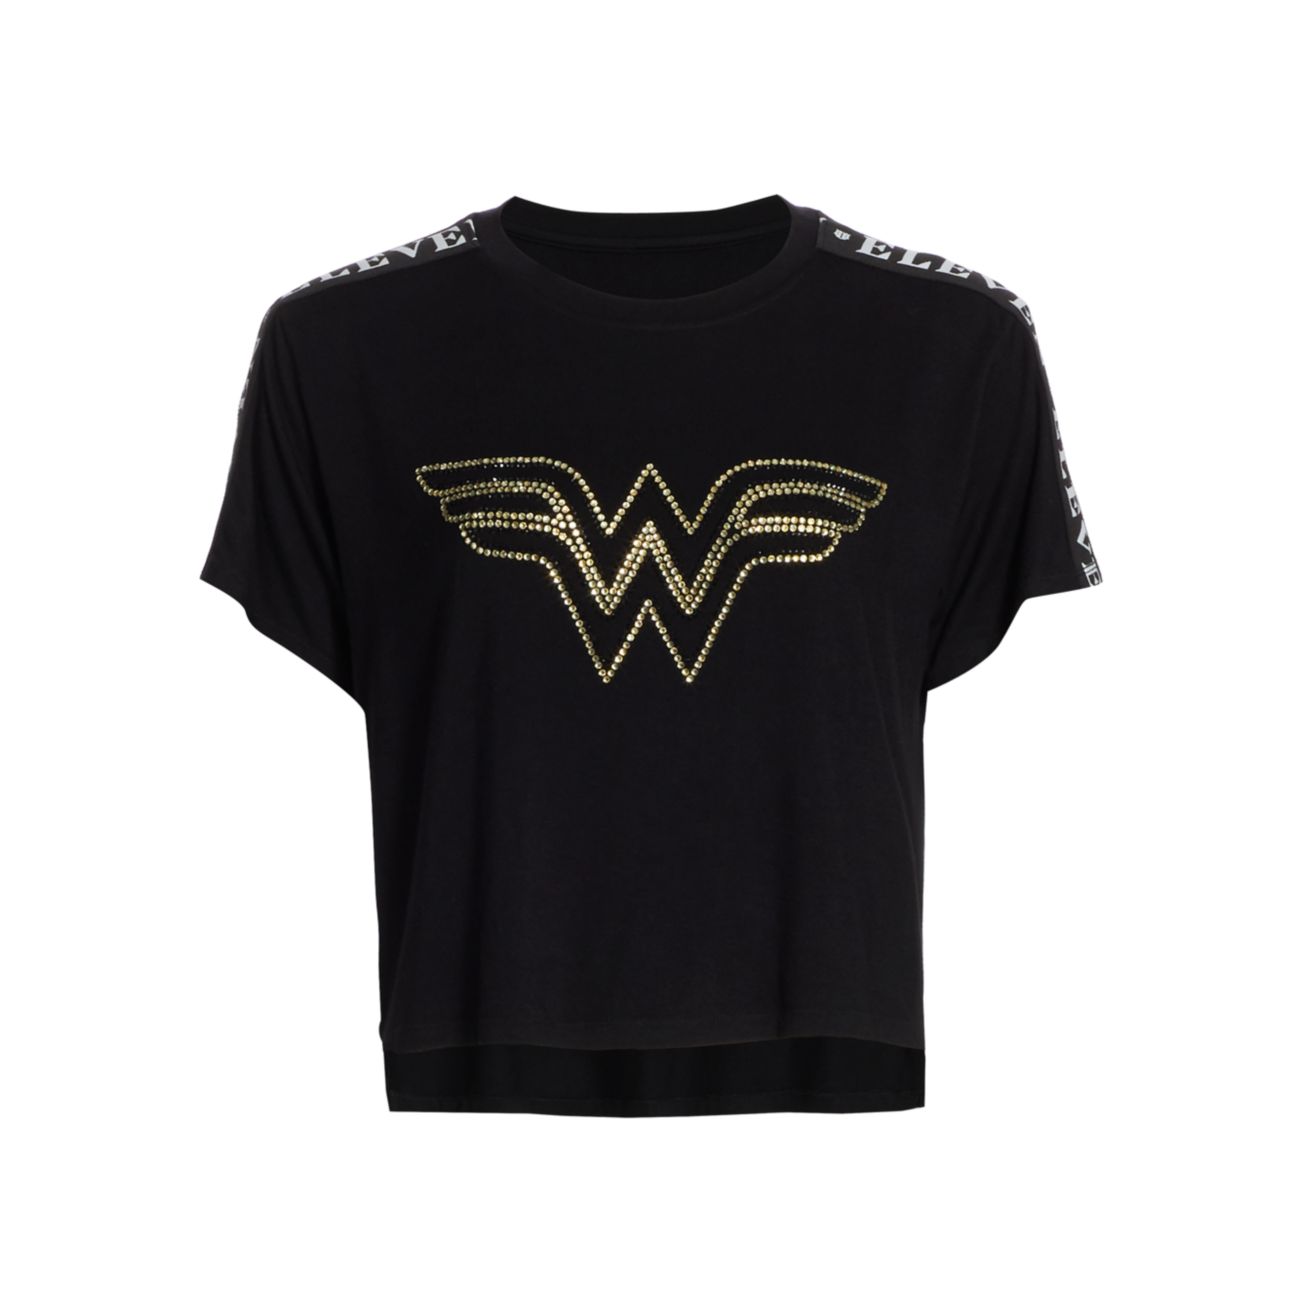 Футболка Wonder Woman со стразами Eleven by Venus Williams